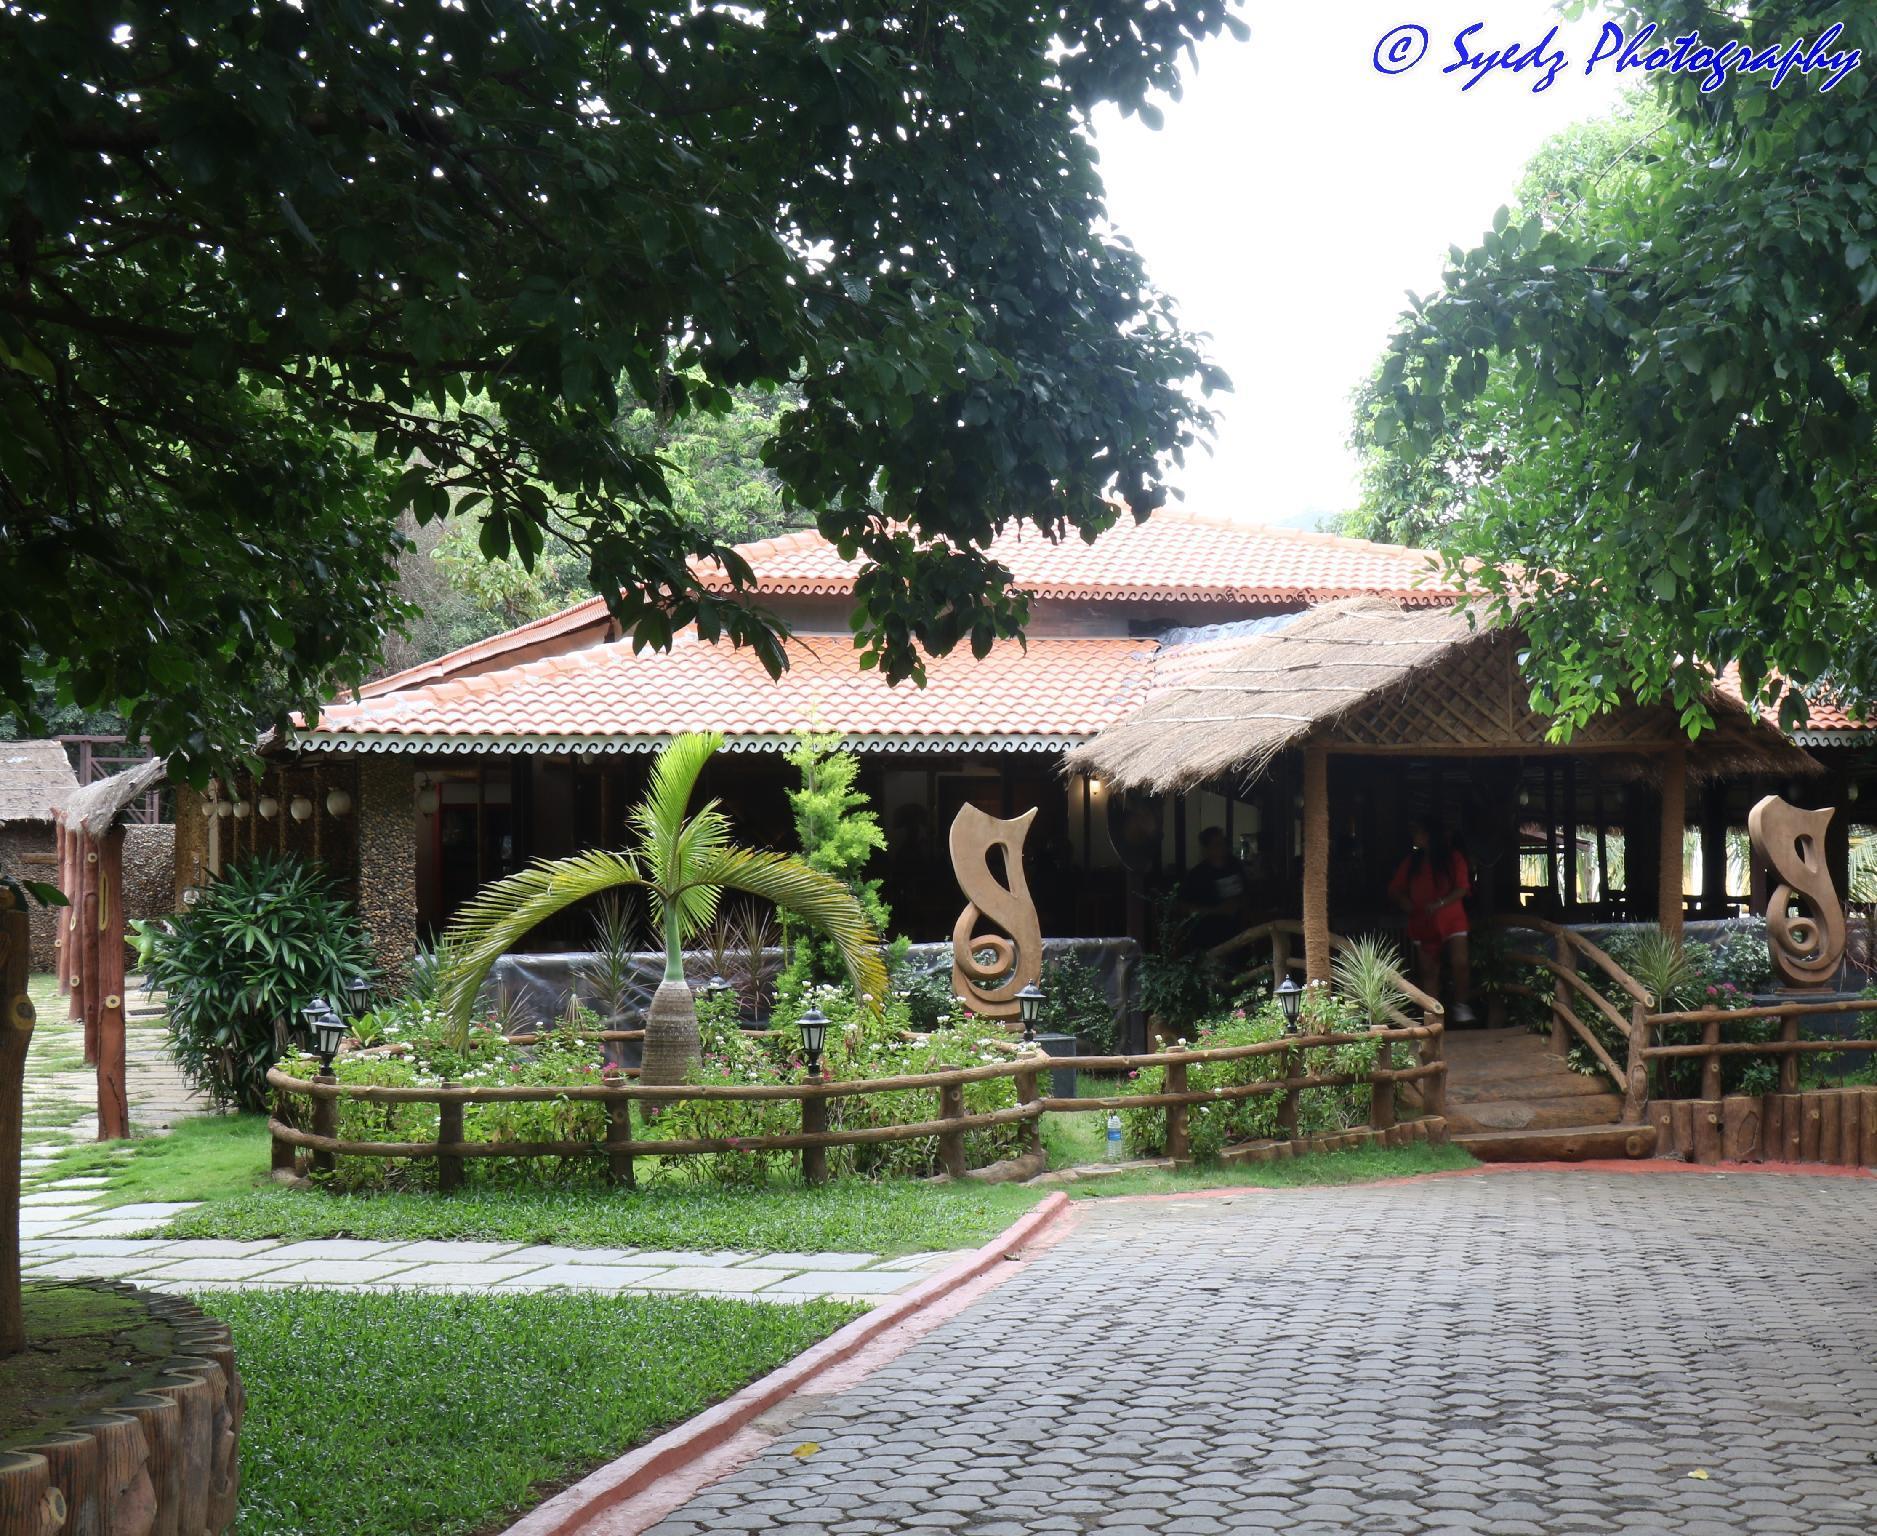 Shangri-la Jungle Village Resort - Karnataka